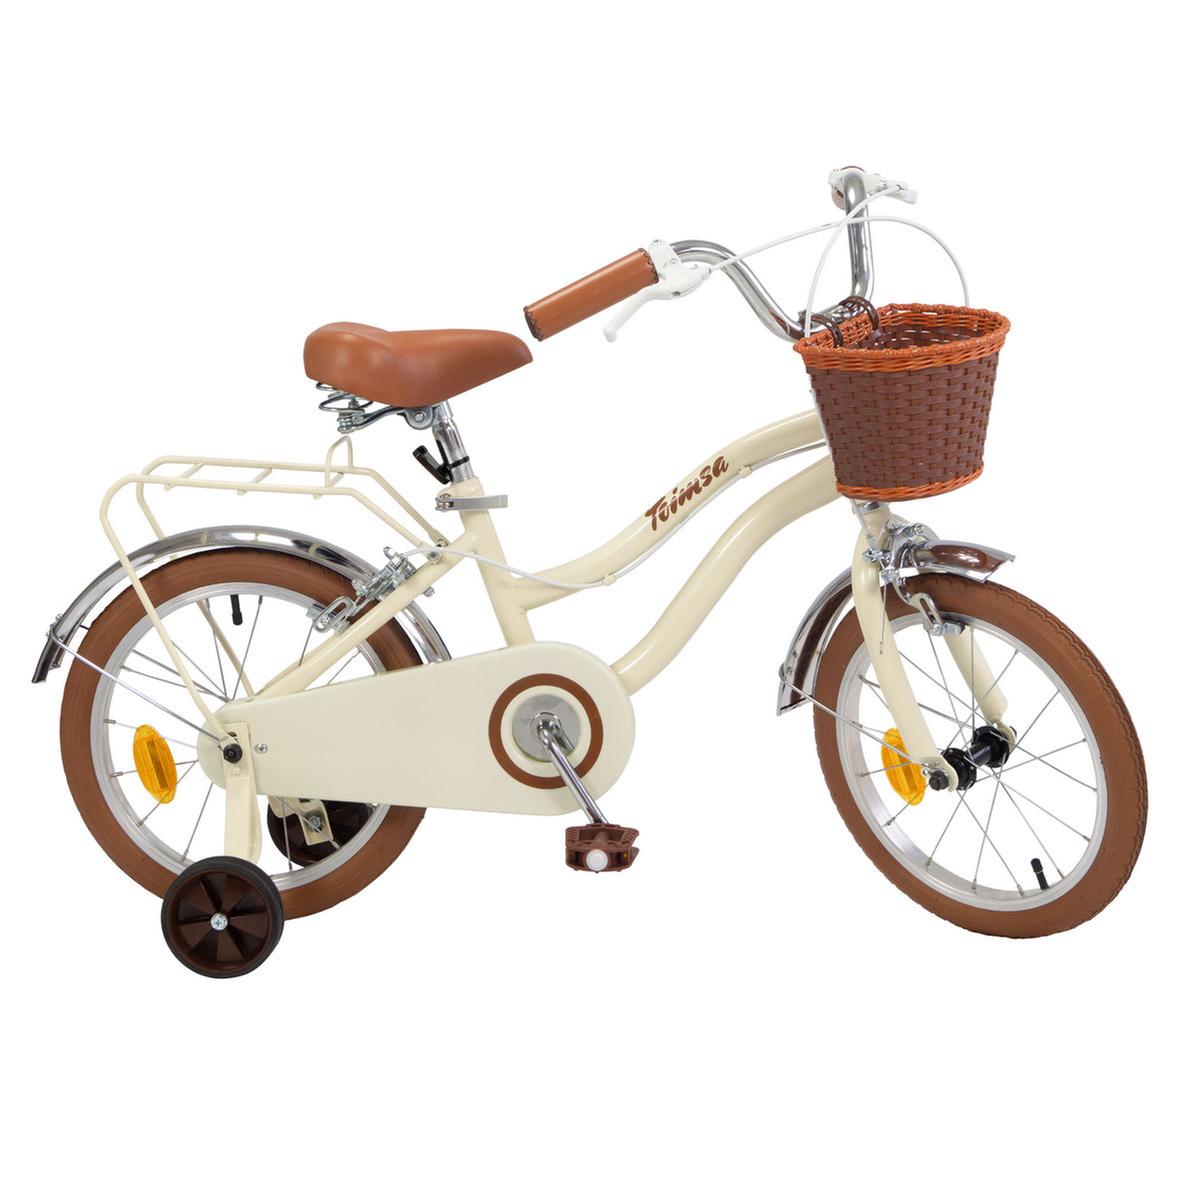 Normalmente Serafín proposición Bicicleta Vintage Marrón 16 Pulgadas | Bicis 16' Fanatsia | Toys"R"Us España